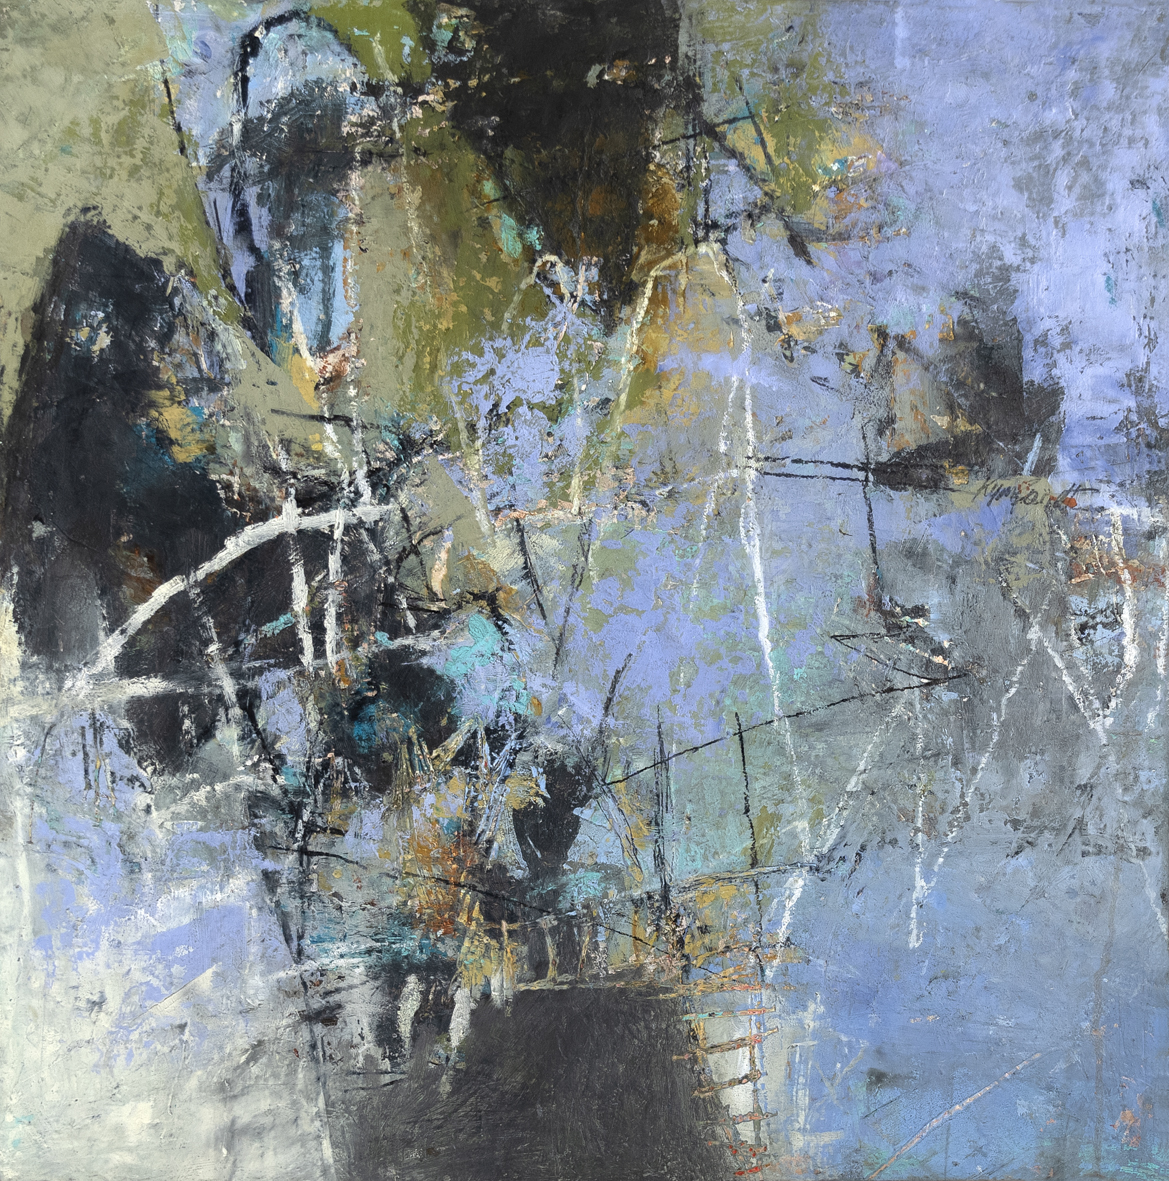 Landscape of Mirrors 2022 | Kym Barrett | Oils and cold wax medium on board | 48 x 48 cm, framed in dark-stained oak | $1100